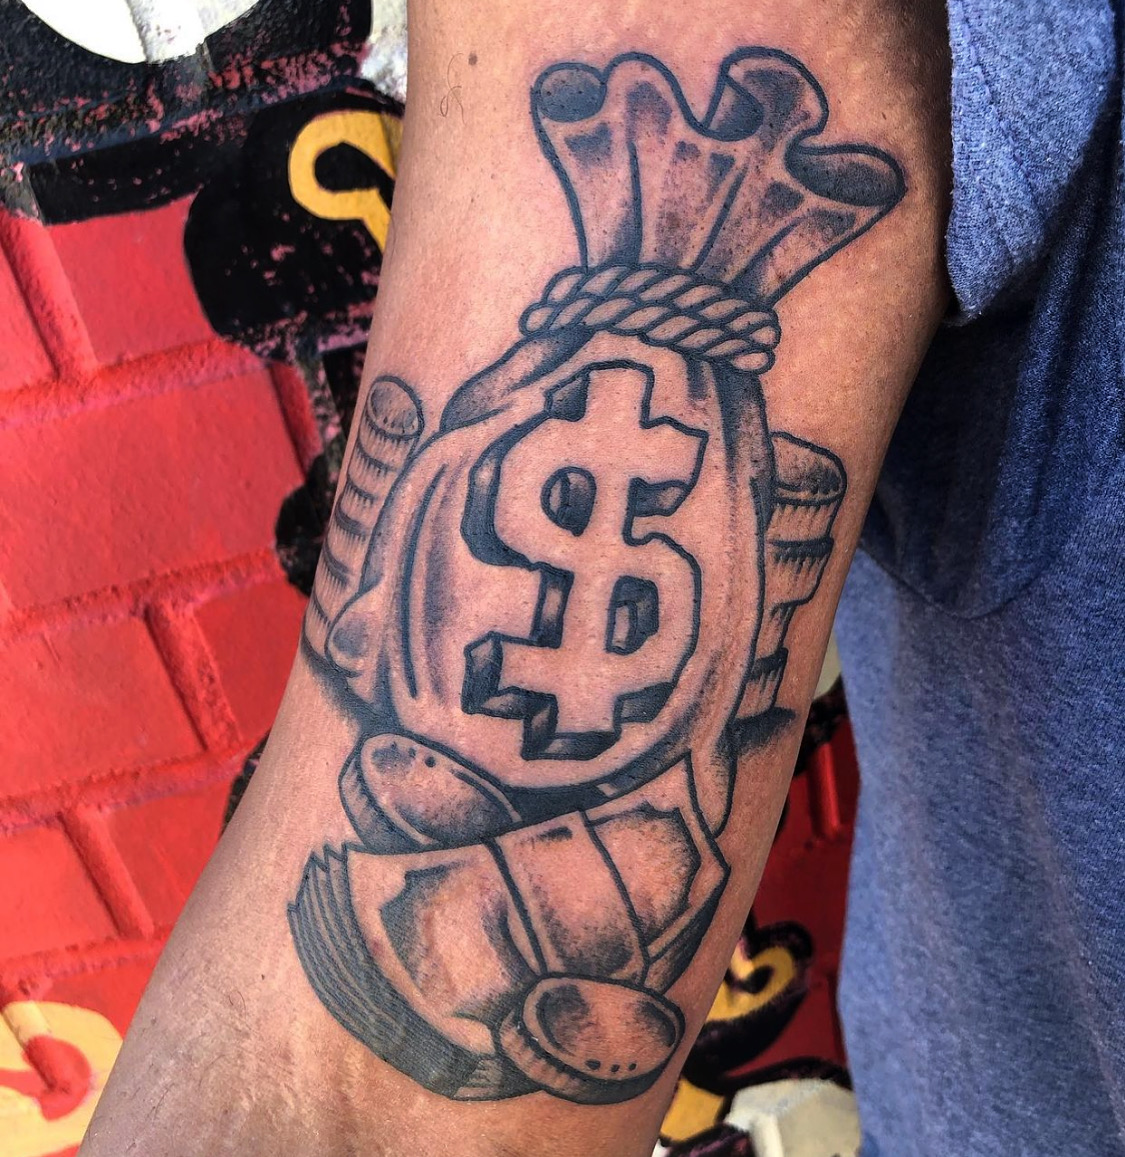 Tattoo of a money bag from top Dallas tattoo artist